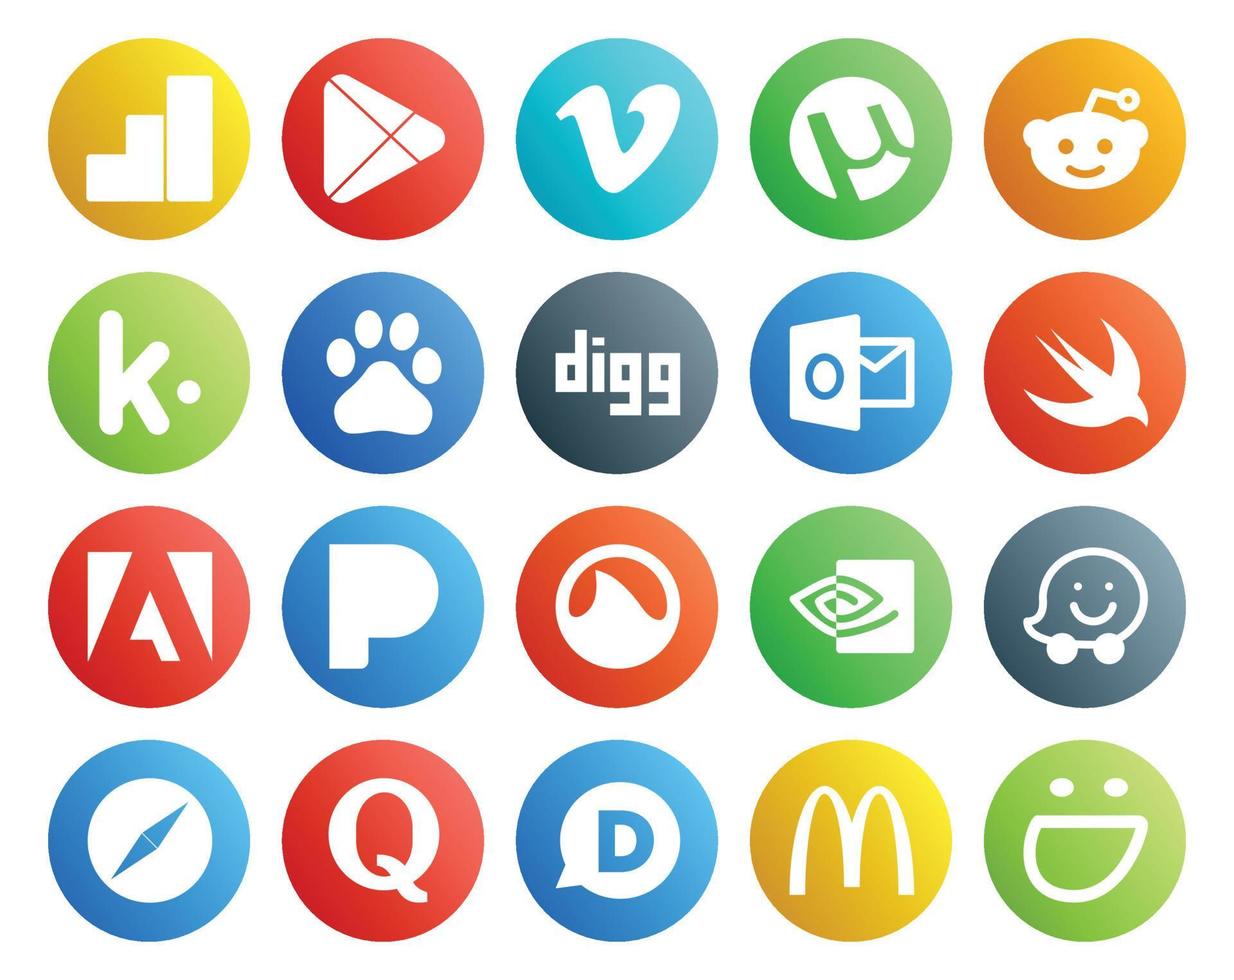 20 Social Media Icon Pack inklusive Safari NVIDIA Baidu Grooveshark Adobe vektor